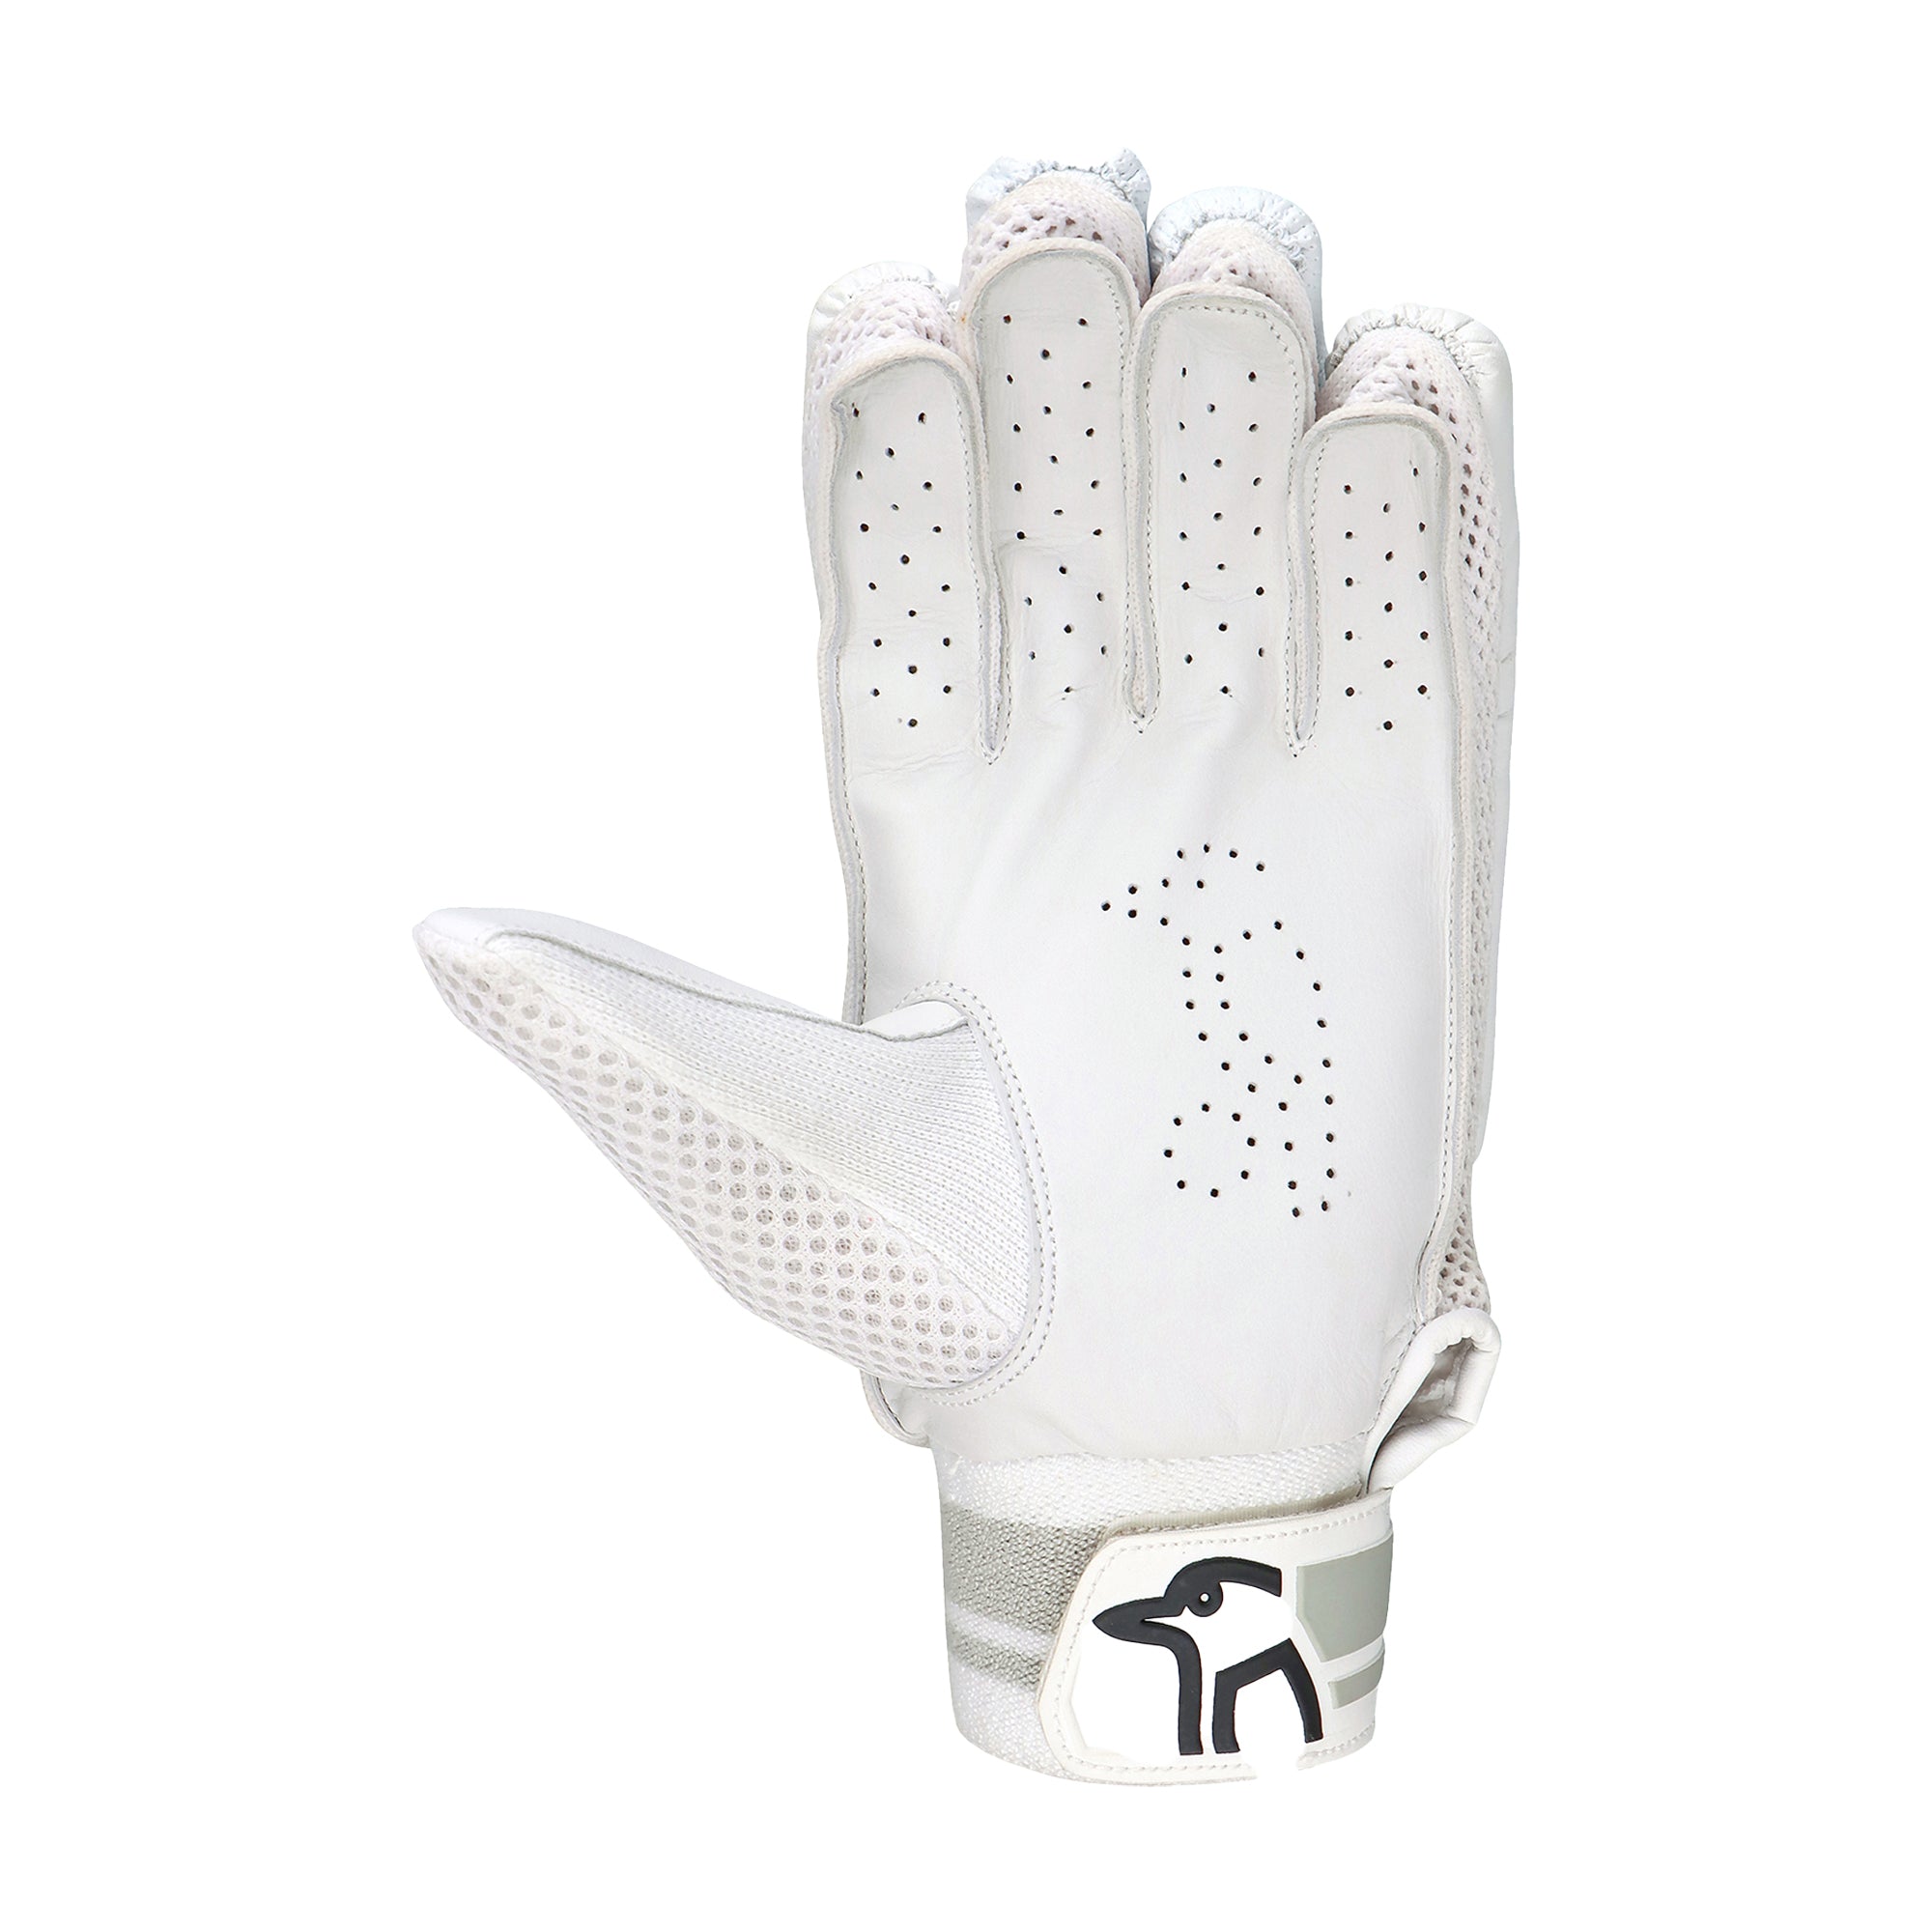 Kookaburra Ghost Pro 7.0 Cricket Batting Gloves